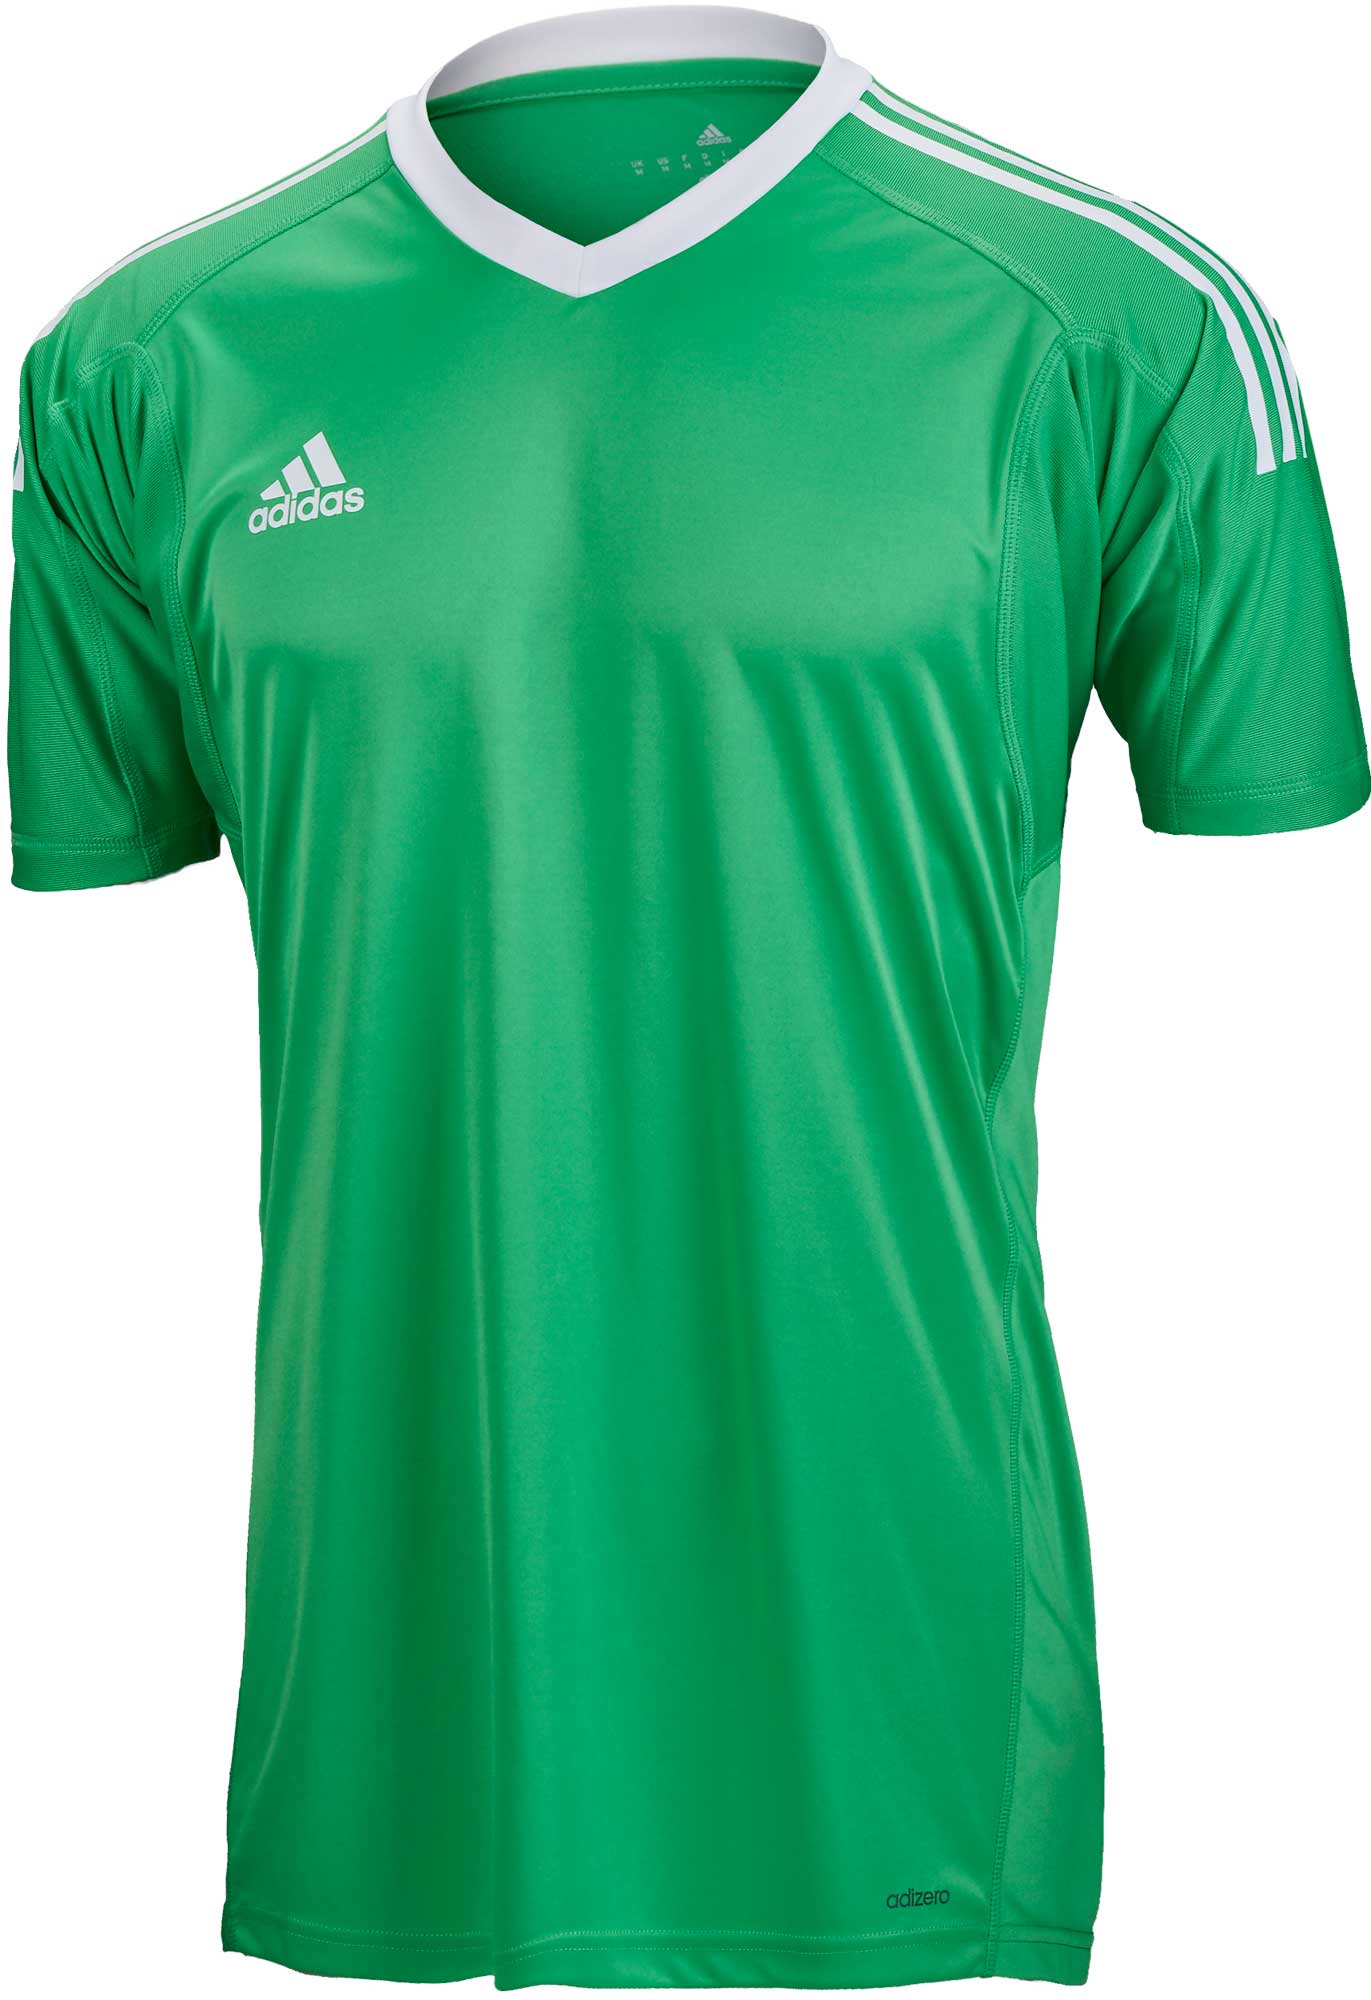 adidas goalkeeper jersey 2018